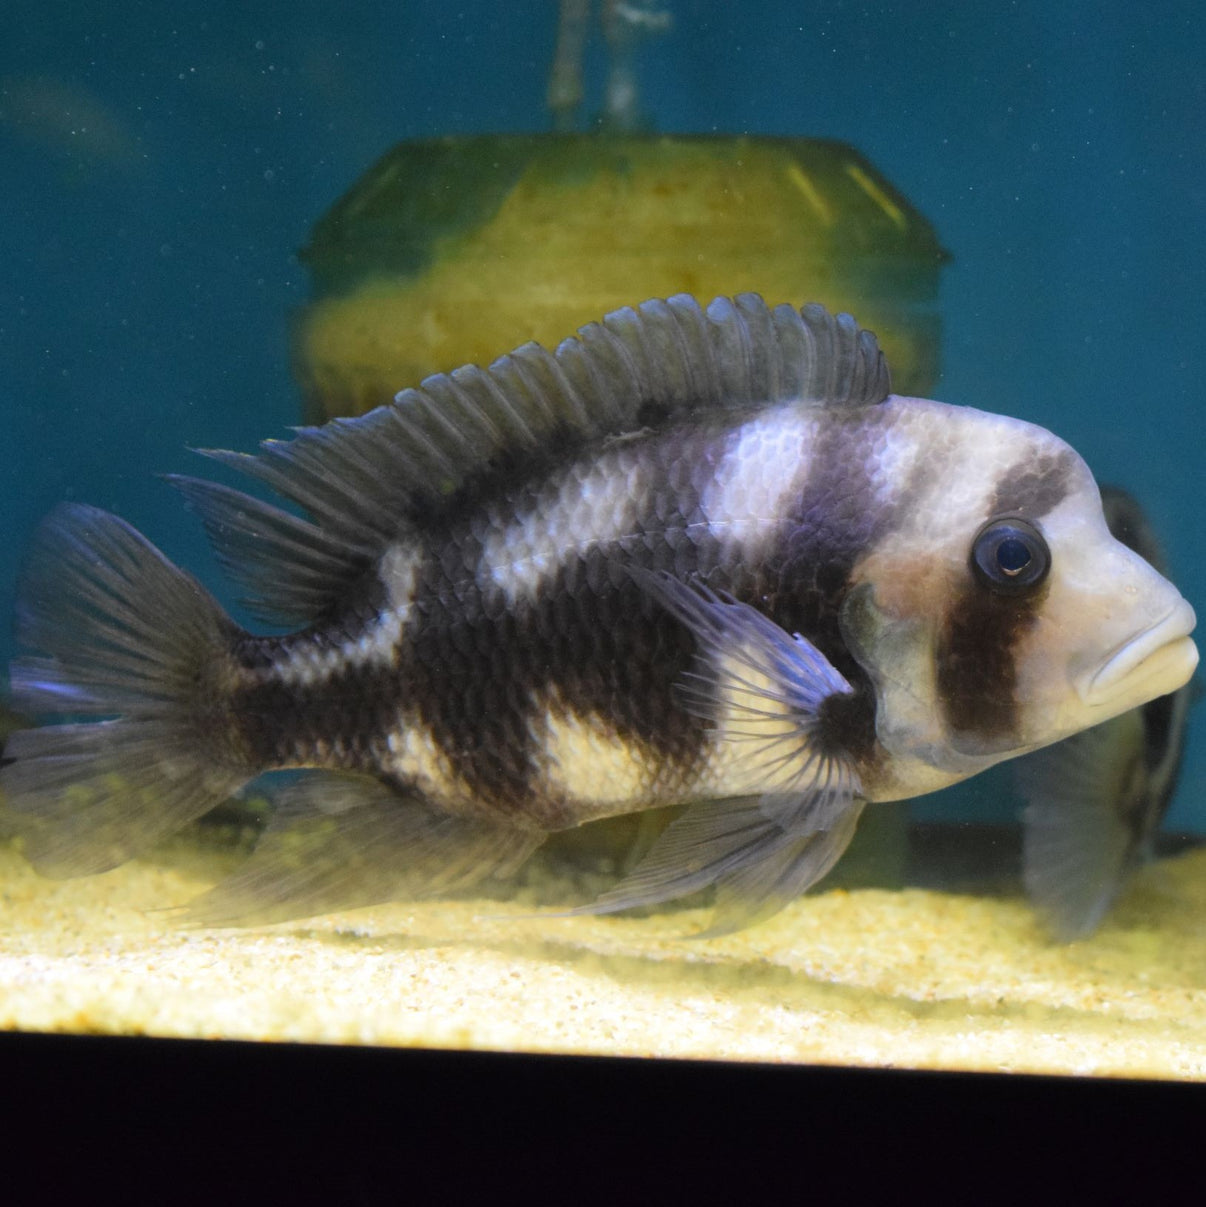 BLACK WIDOW FRONTOSA PAIR - for sale at Aquarium Fish Depot